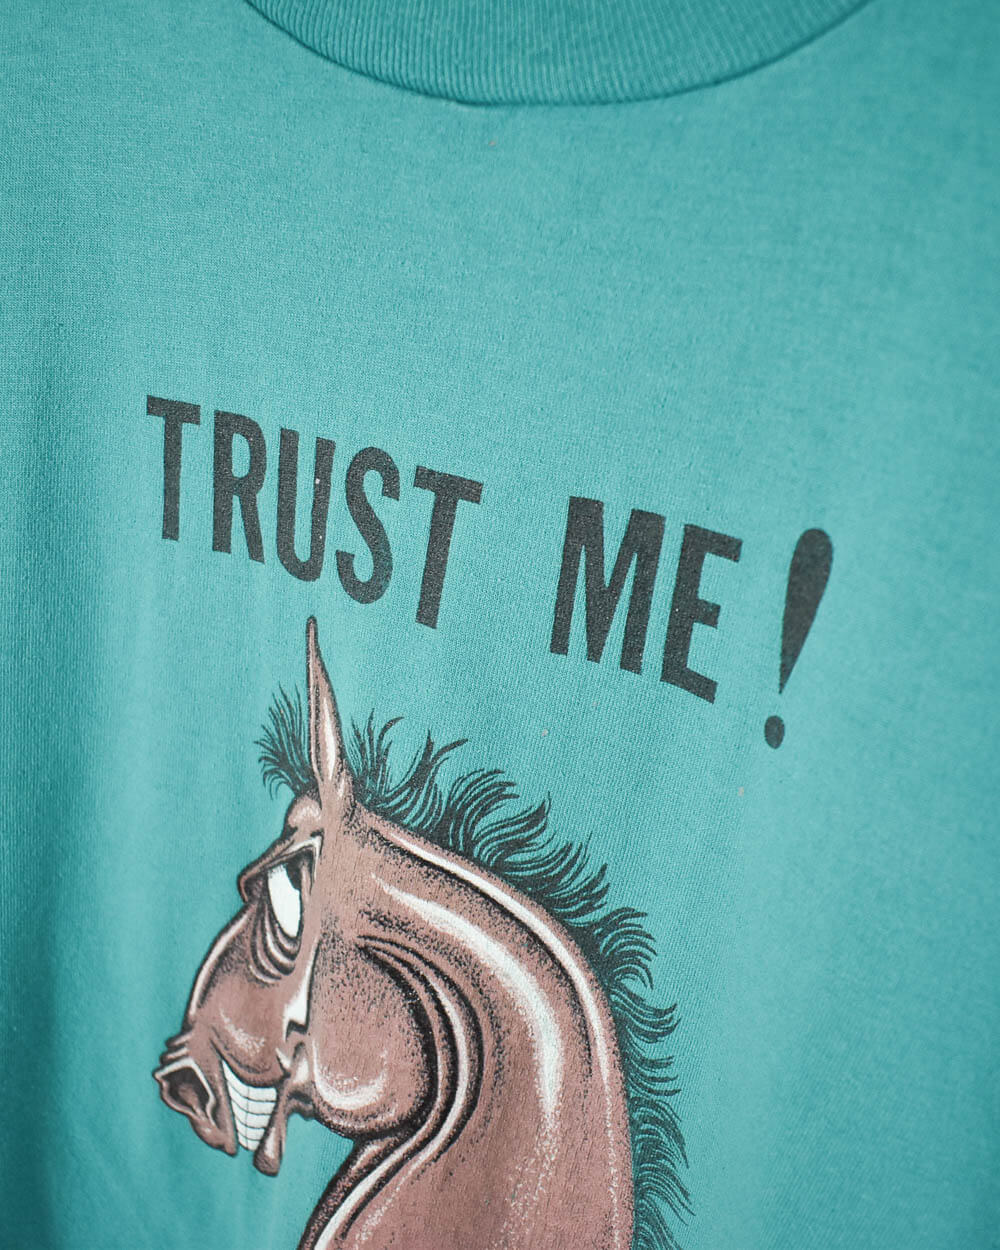 Green Trust Me T-Shirt - Large